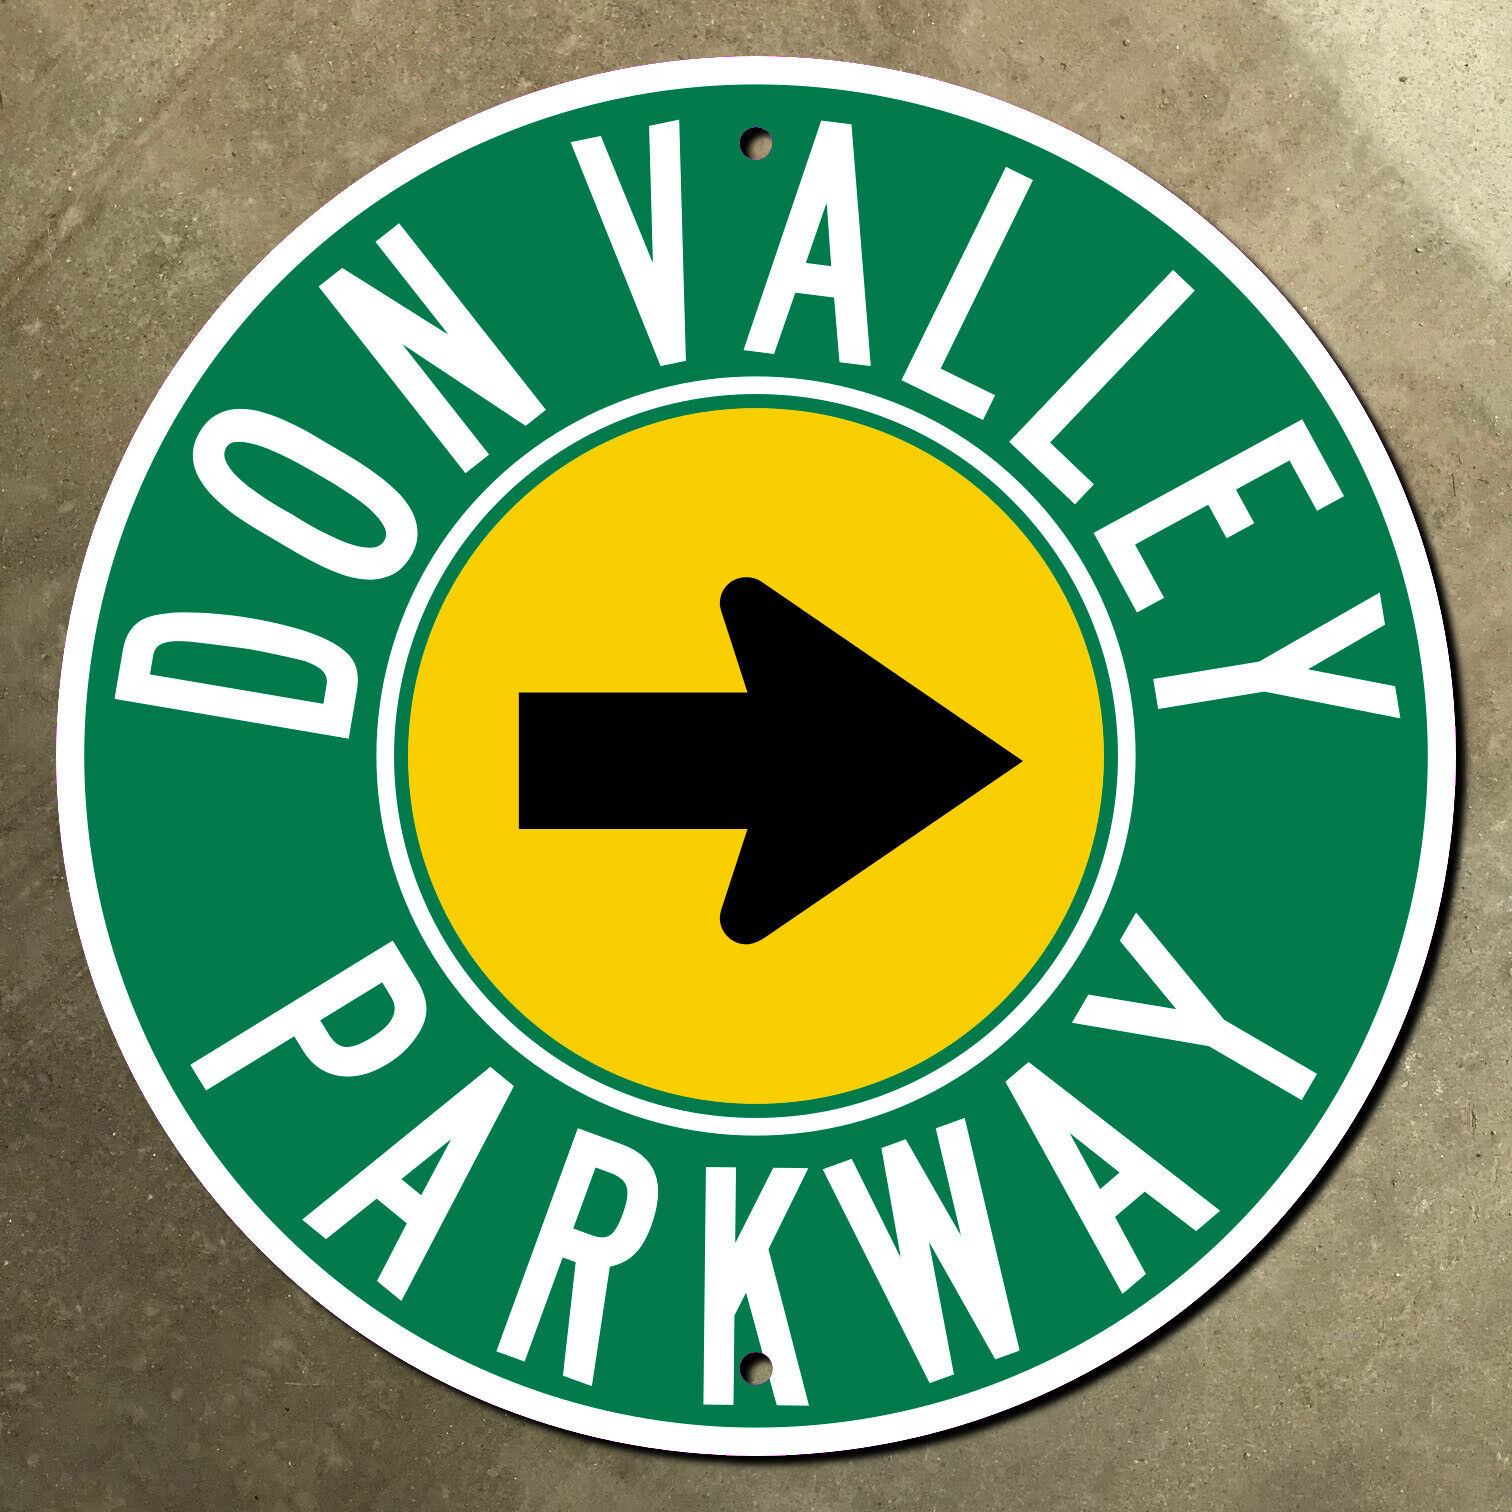 Don Valley Parkway Toronto Ontario highway marker 1961 road sign 12x12